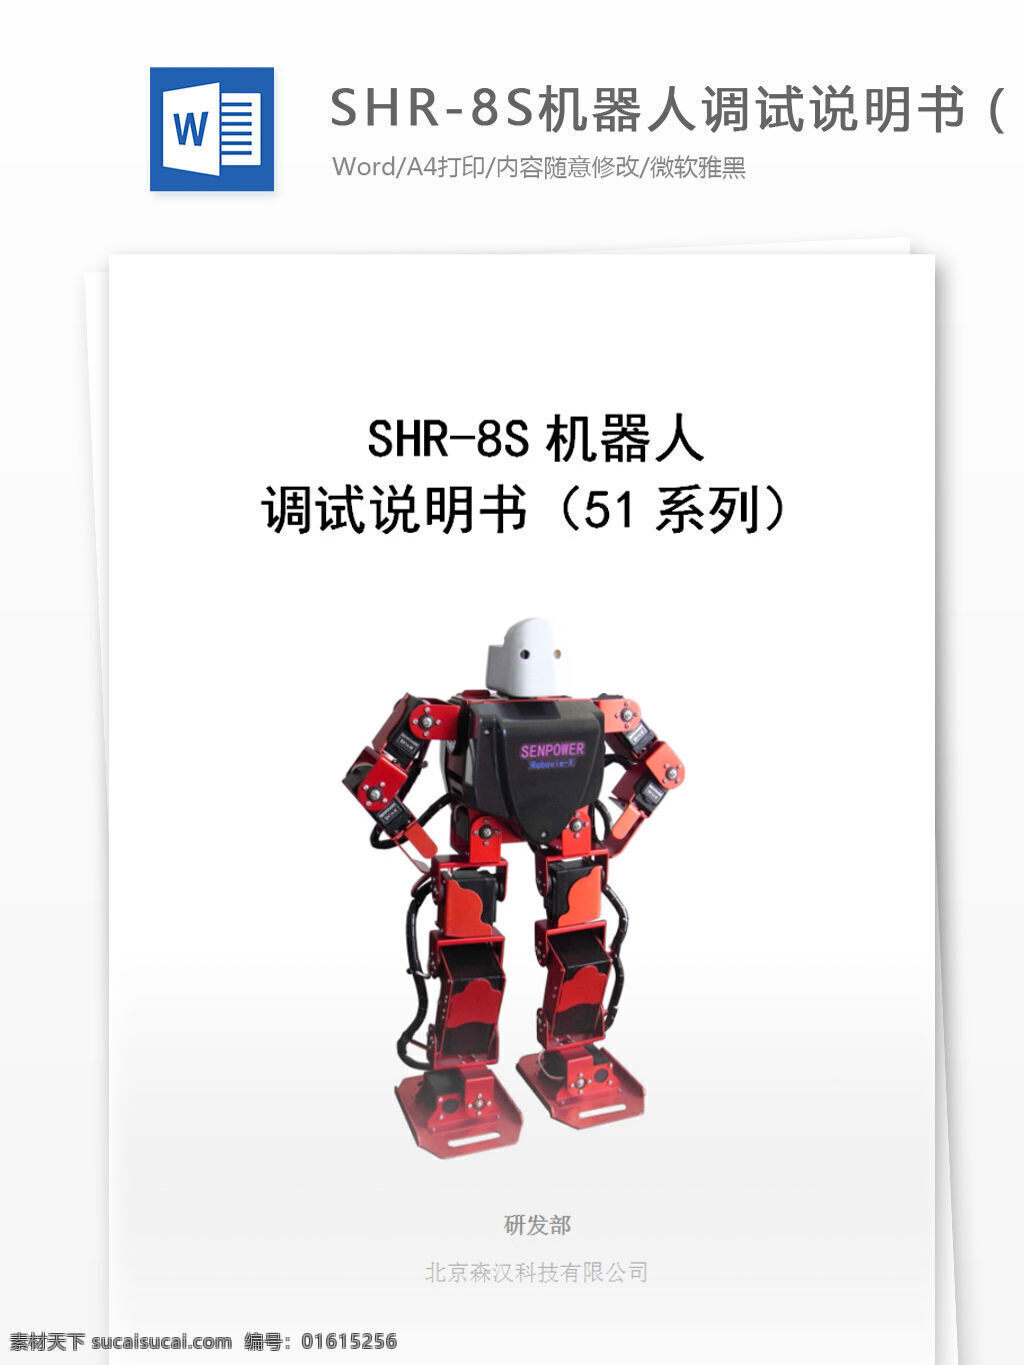 shr8s 调试 说明书 51 系列 word 汇报 实用 文档 文档模板 心得体会 总结 机器人 测试